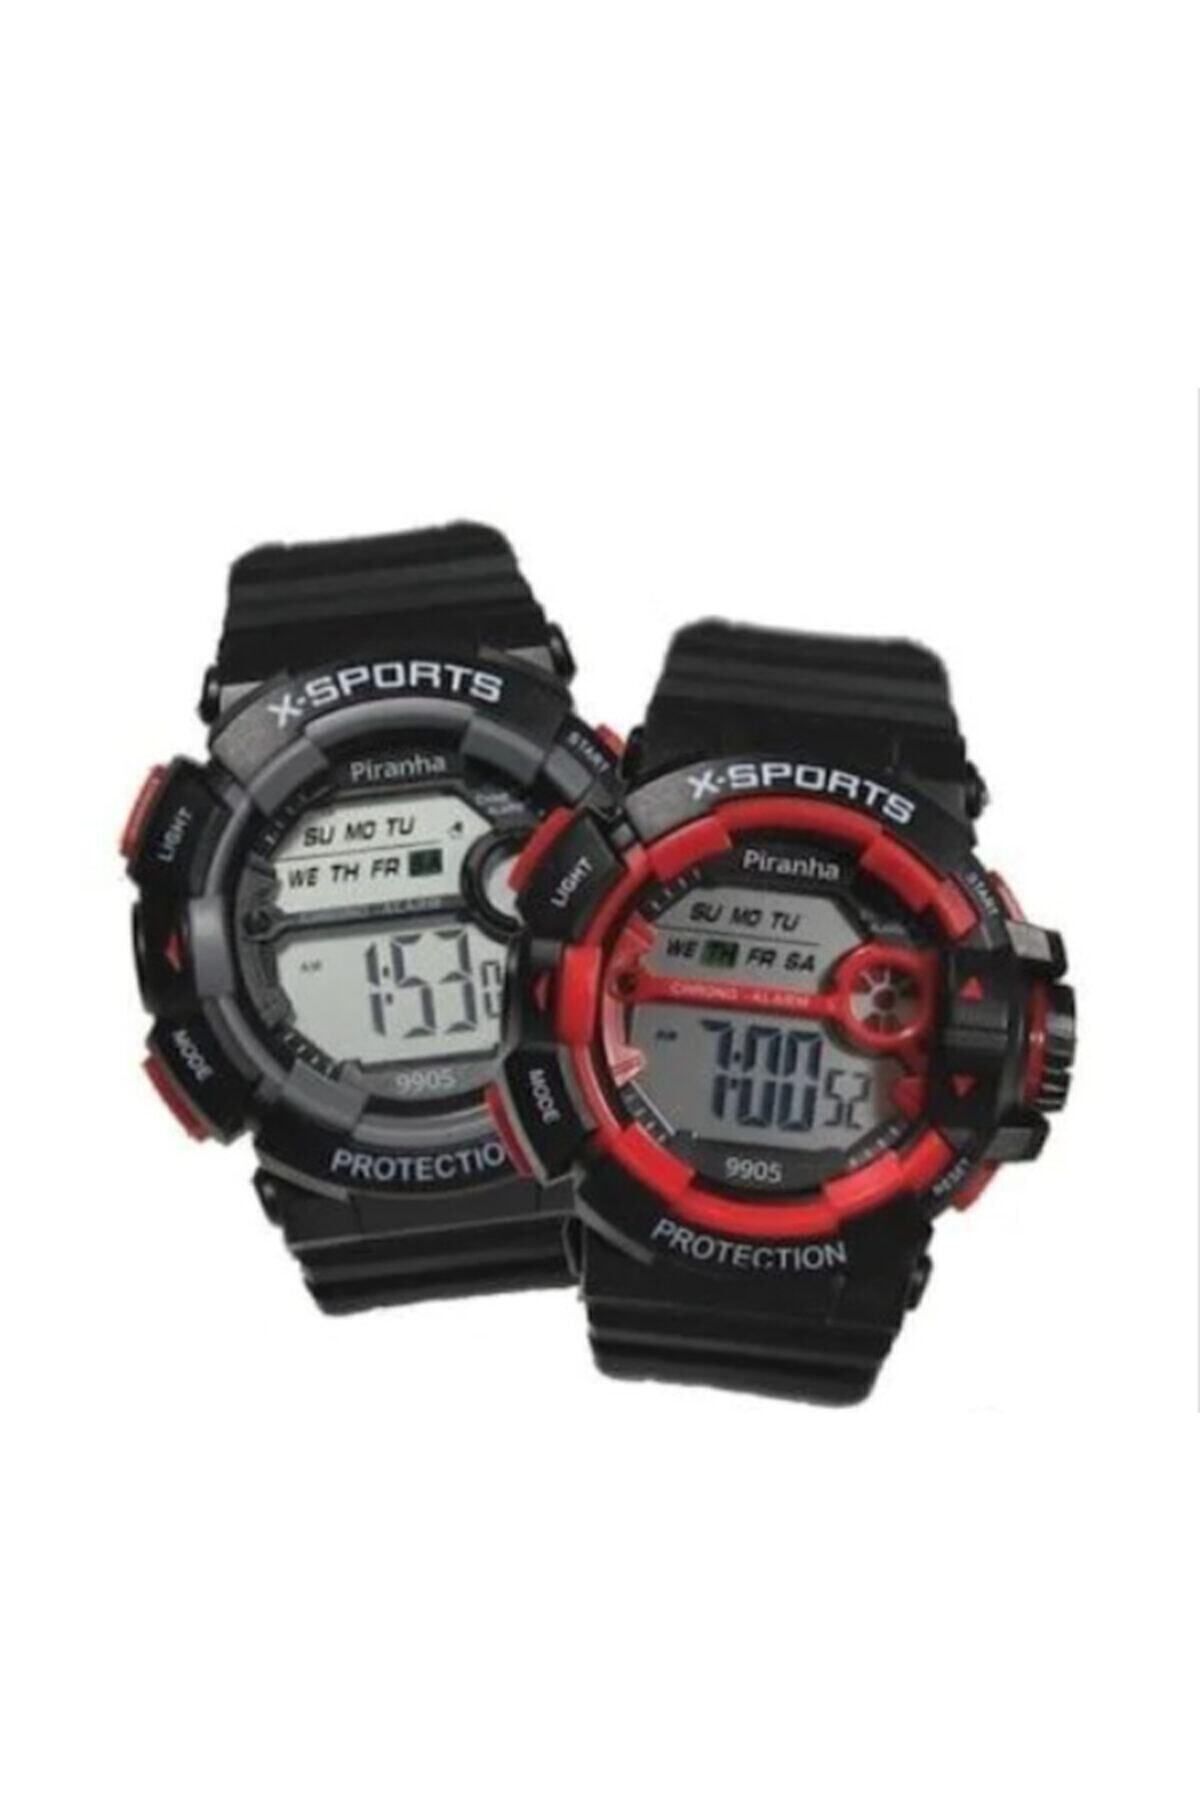 Piranha 9905 X-sports Digital Watch